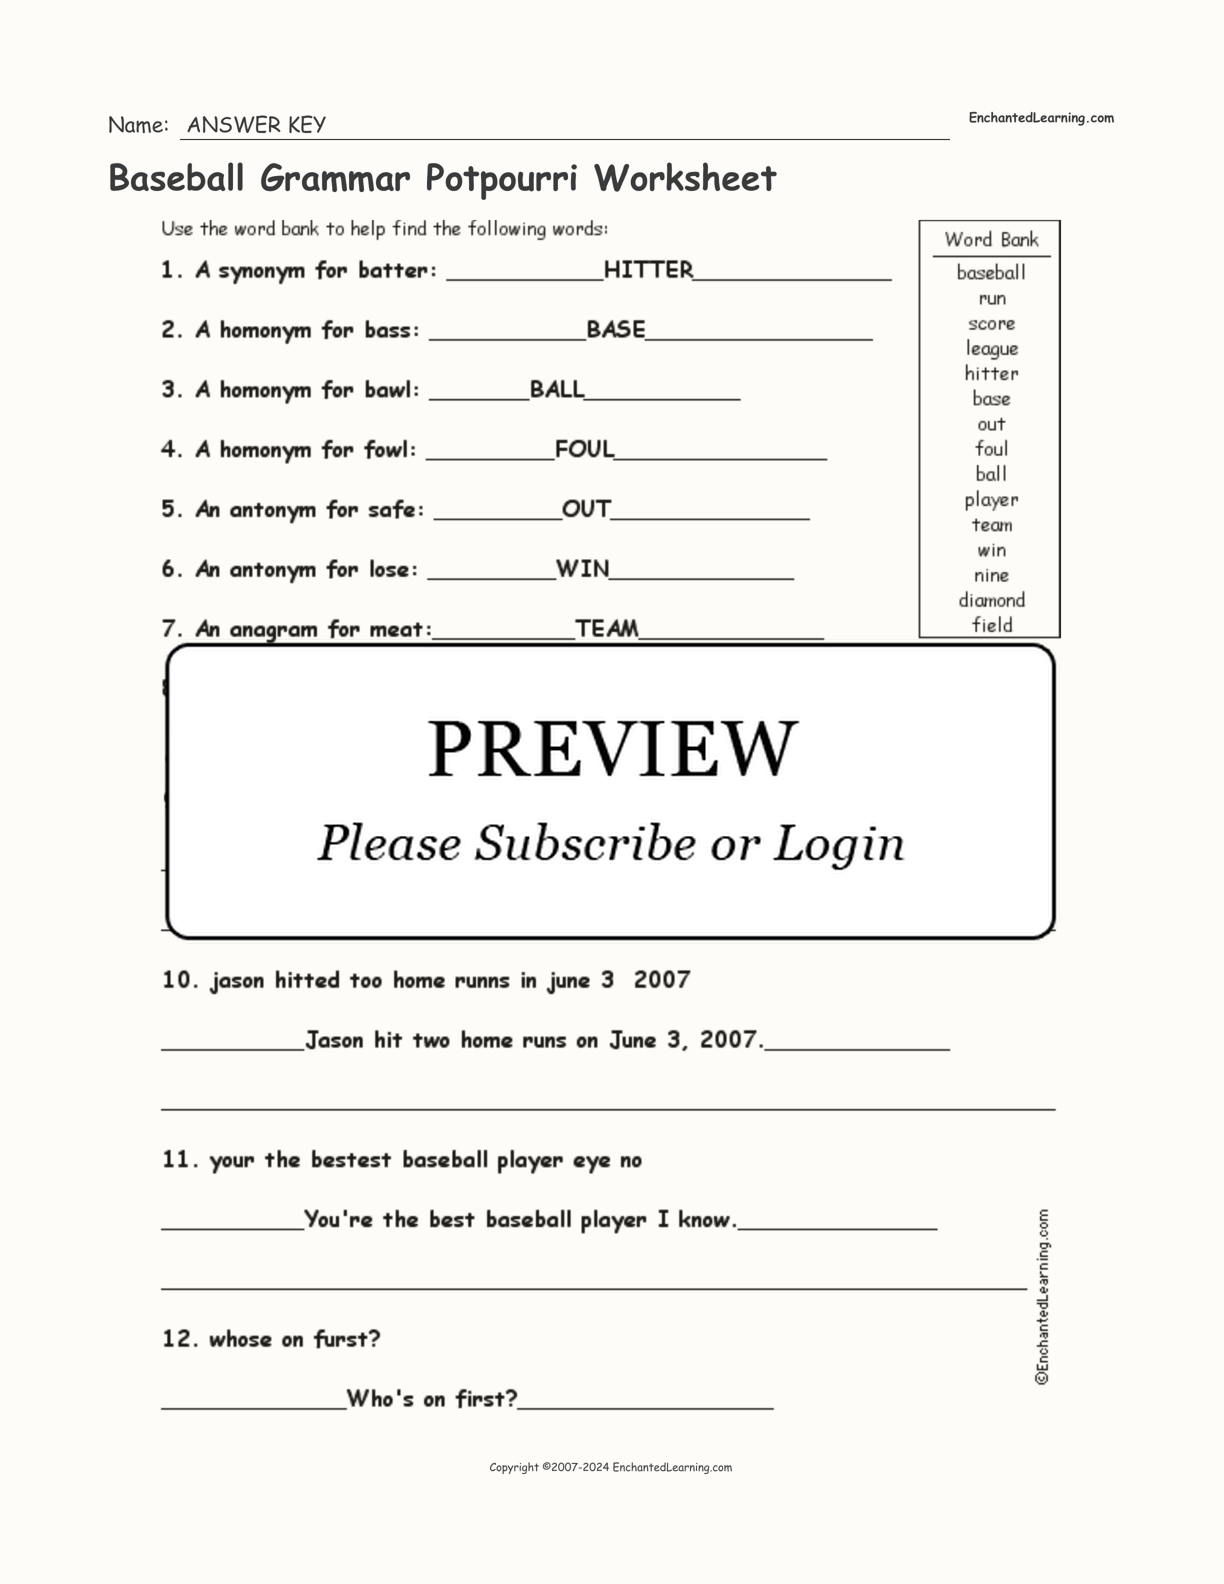 Baseball Grammar Potpourri Worksheet interactive worksheet page 2